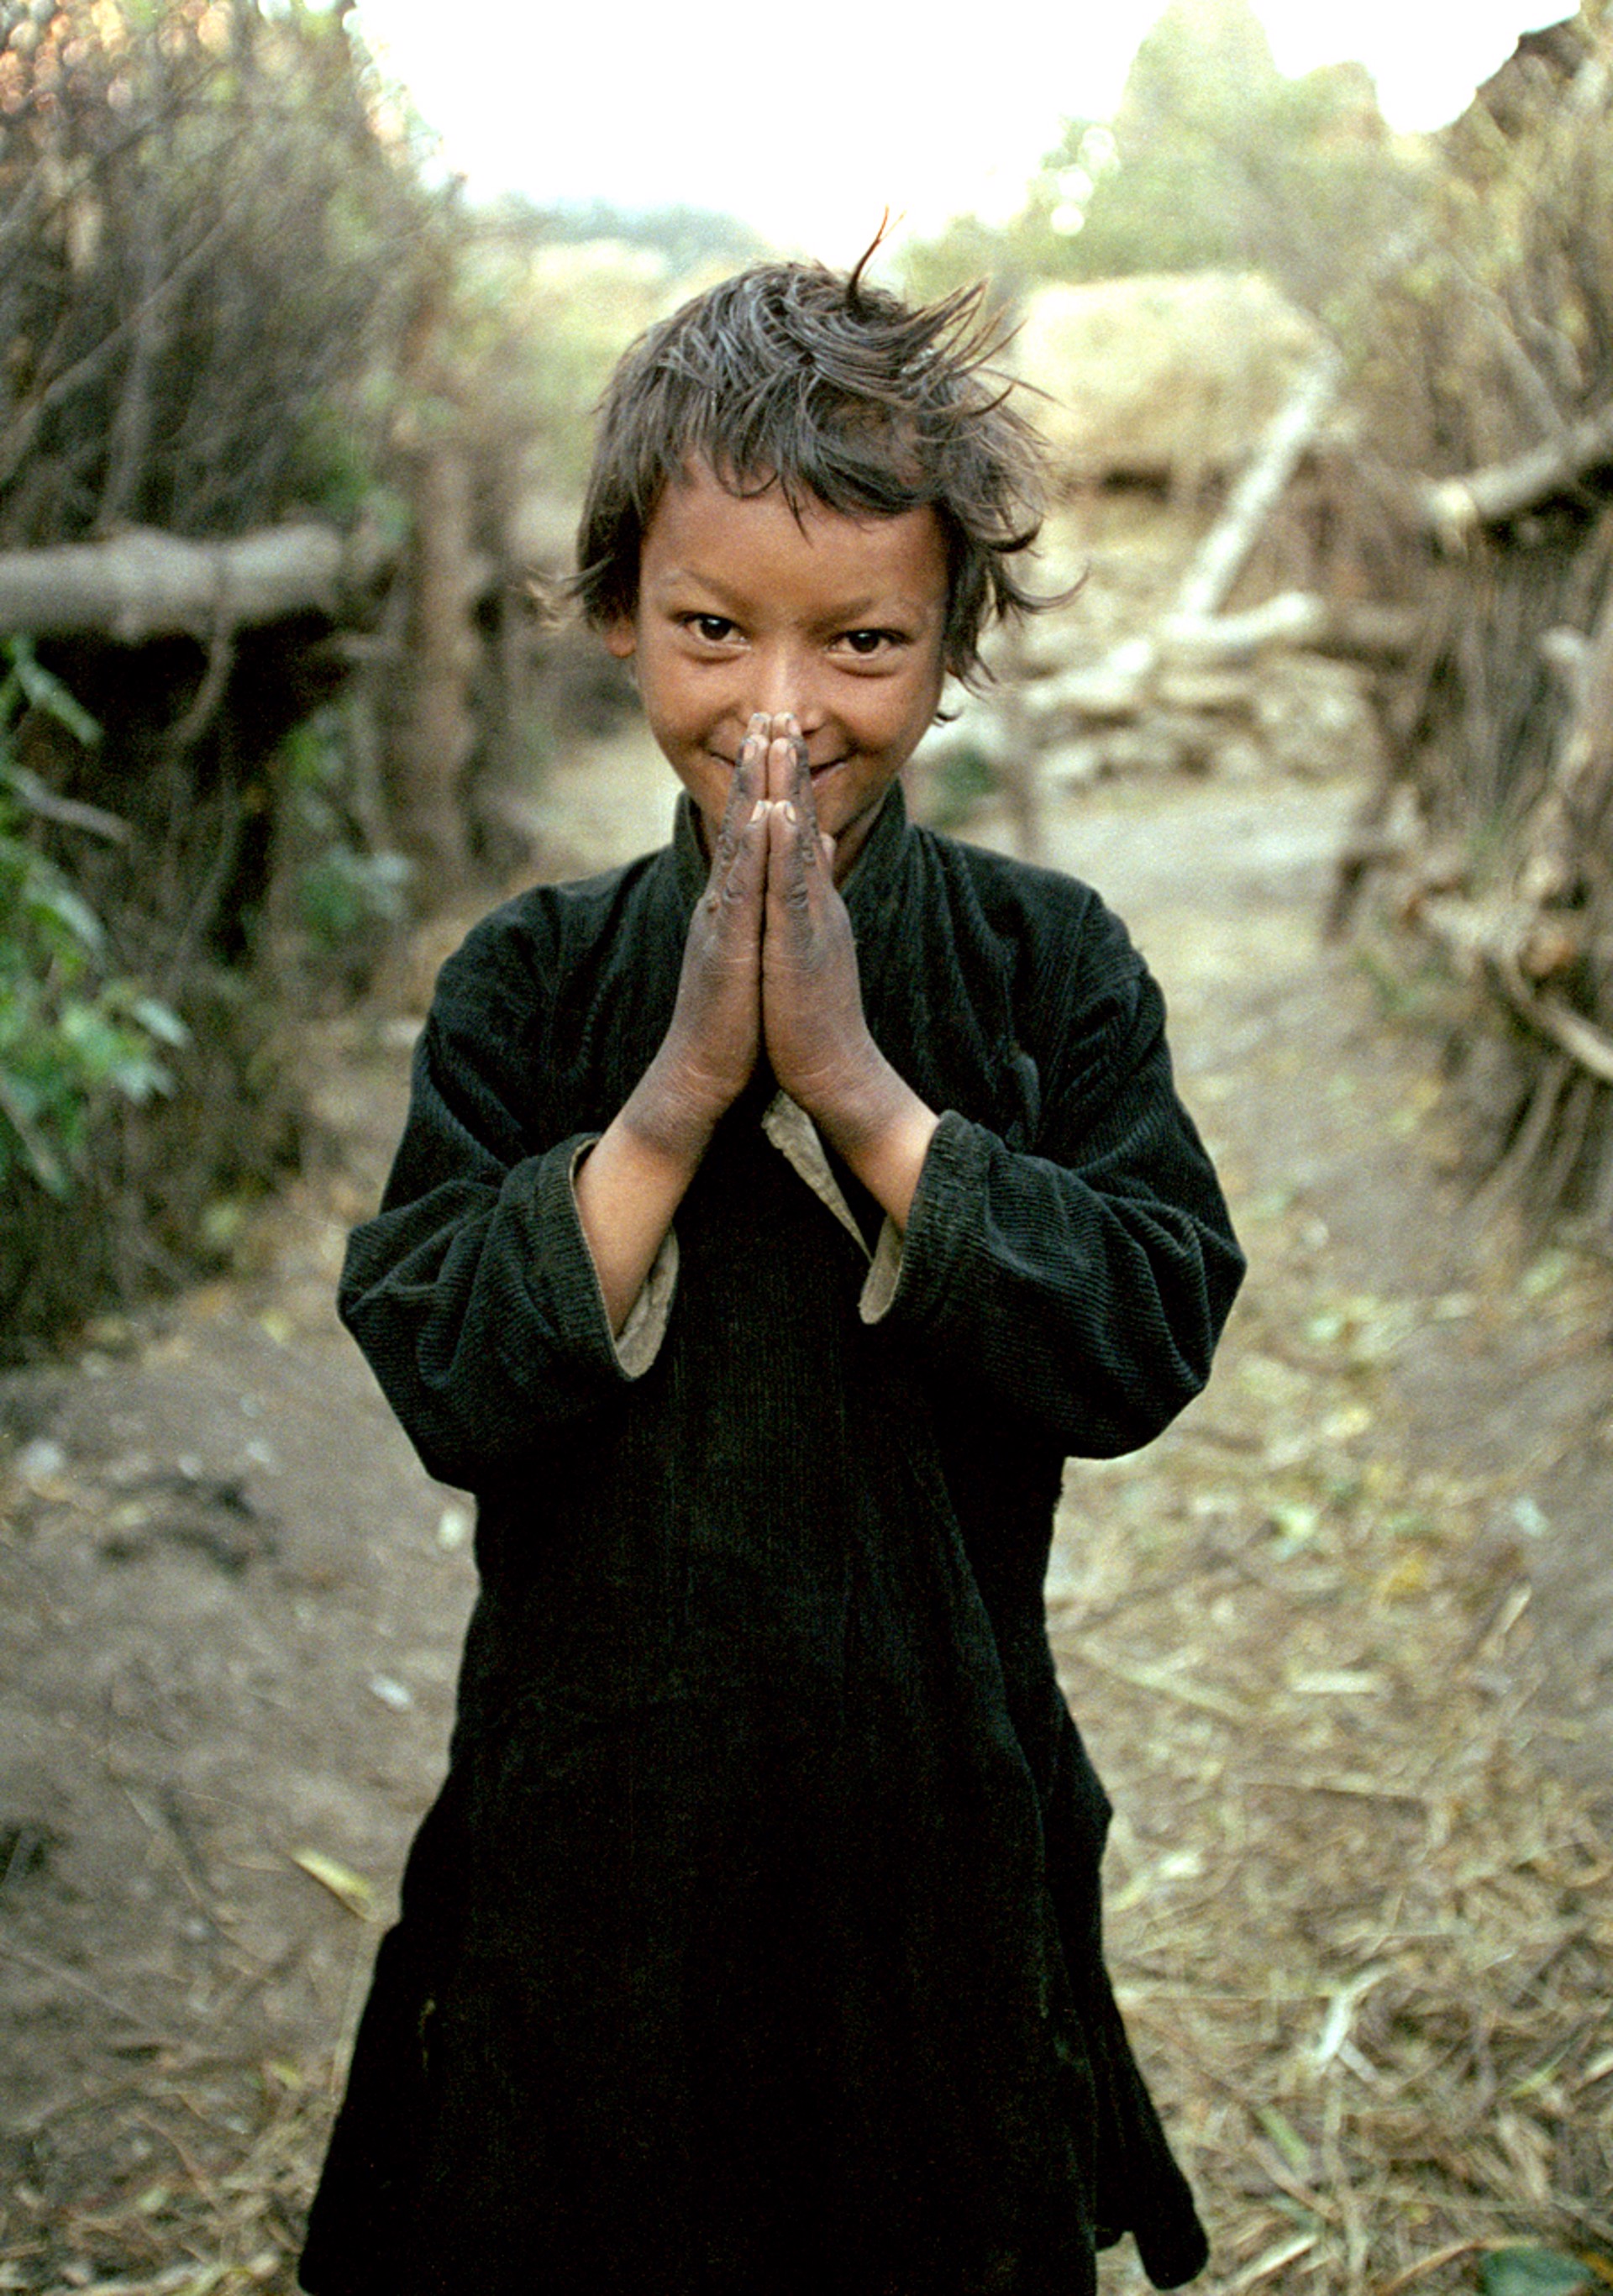 Namaste, Simikot, Humla region, Nepal by Cora Edmonds